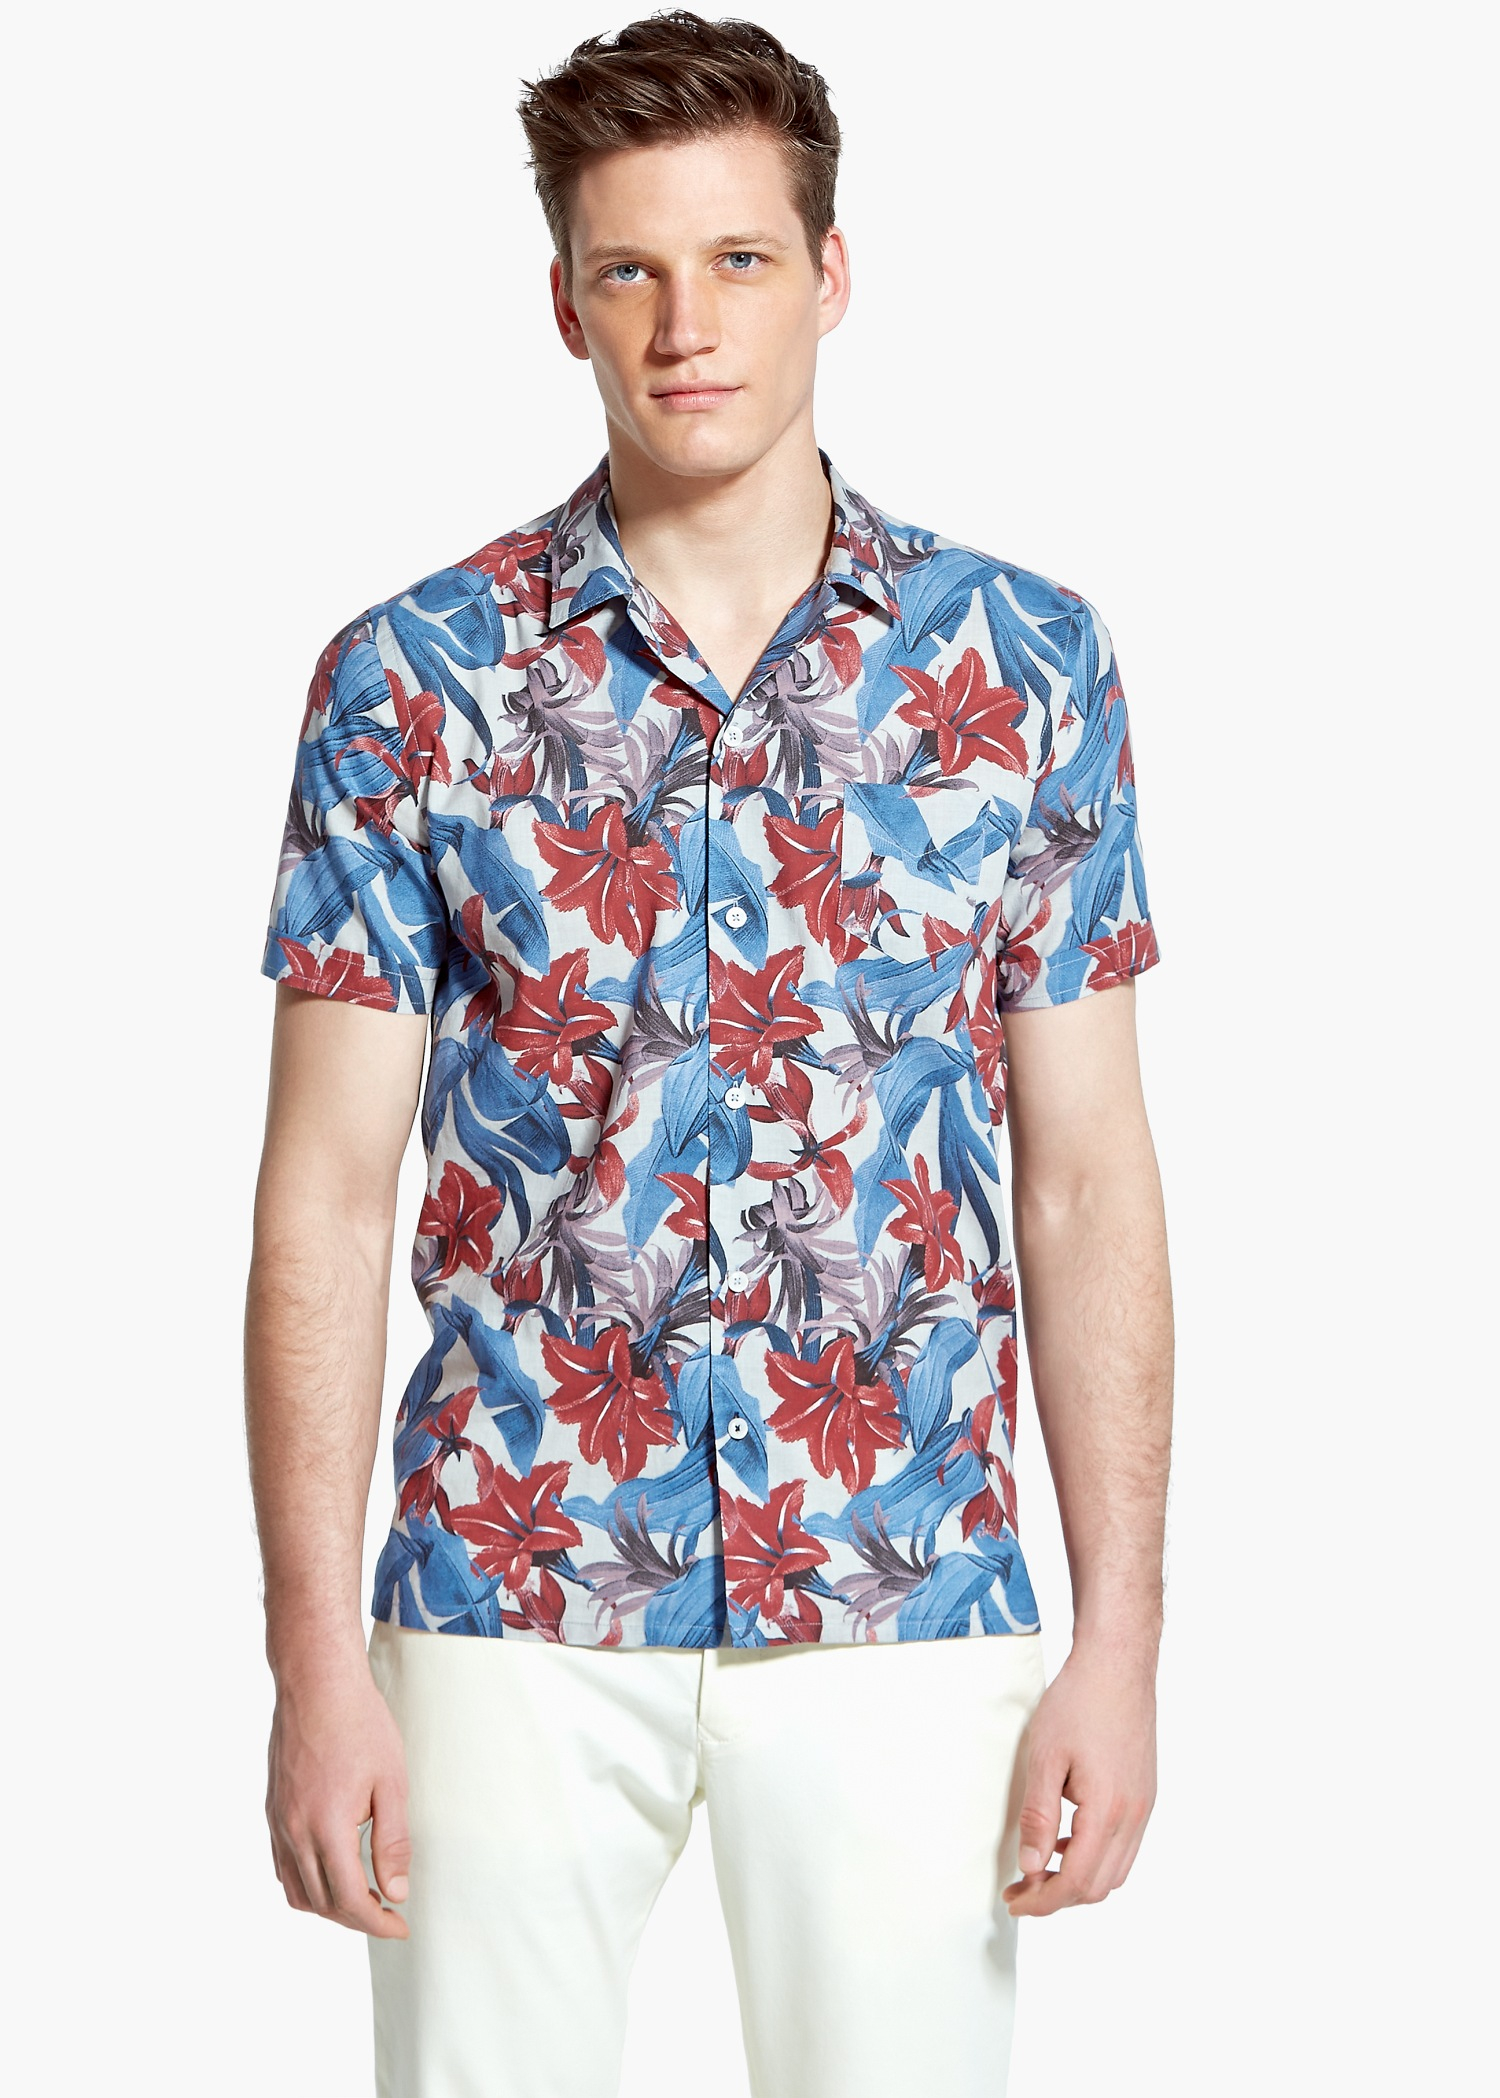 Lyst - Mango Slim-Fit Short Sleeve Tropical-Print Shirt in Blue for Men